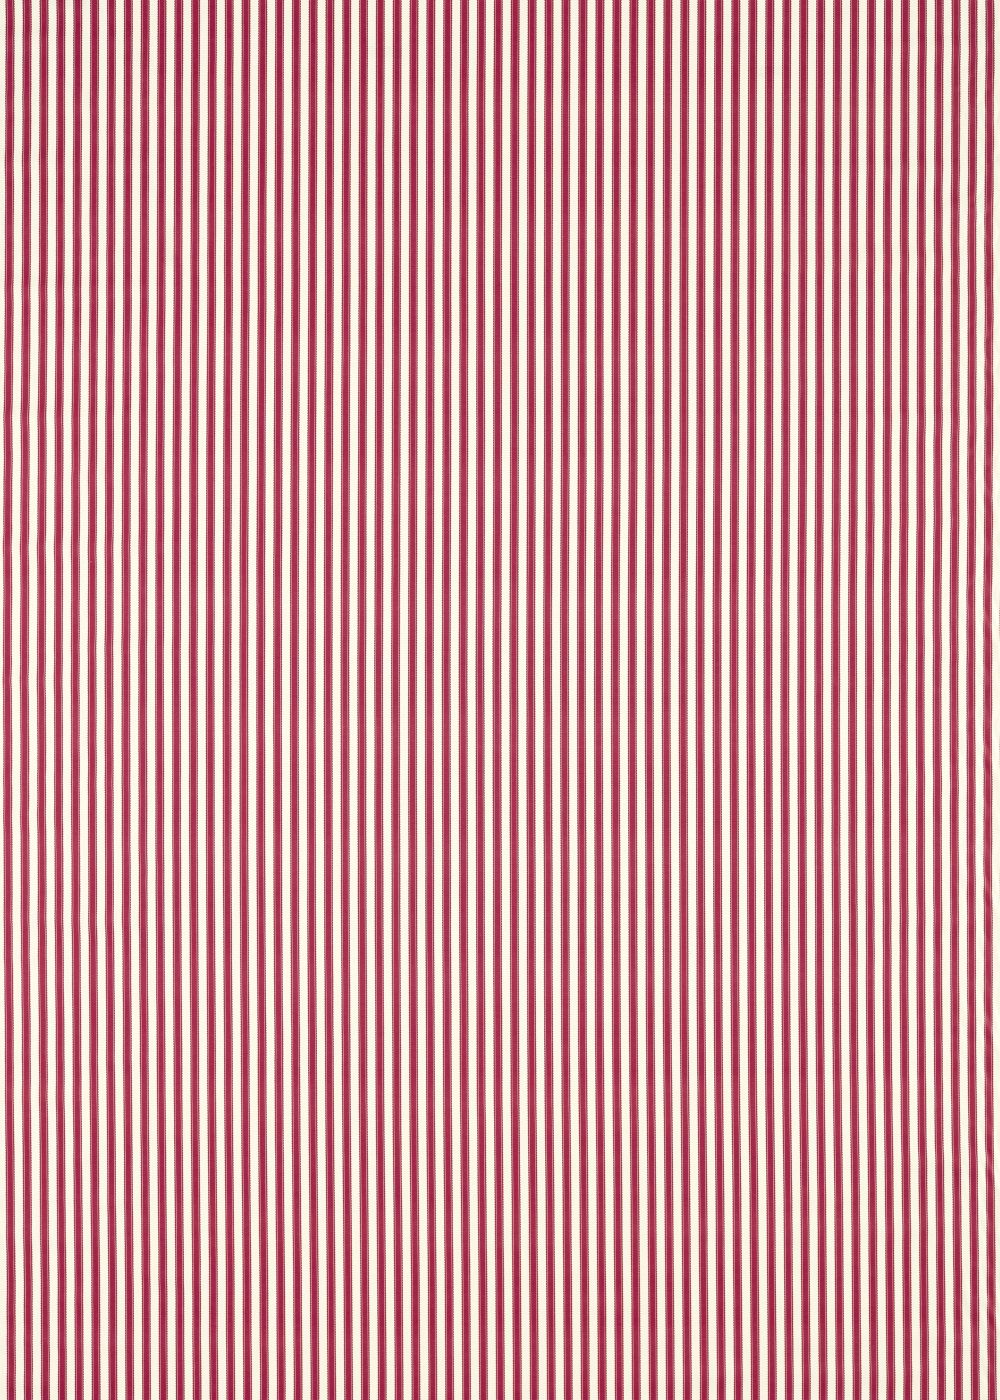 Pinetum Stripe Fabric - Mulberry - by Sanderson